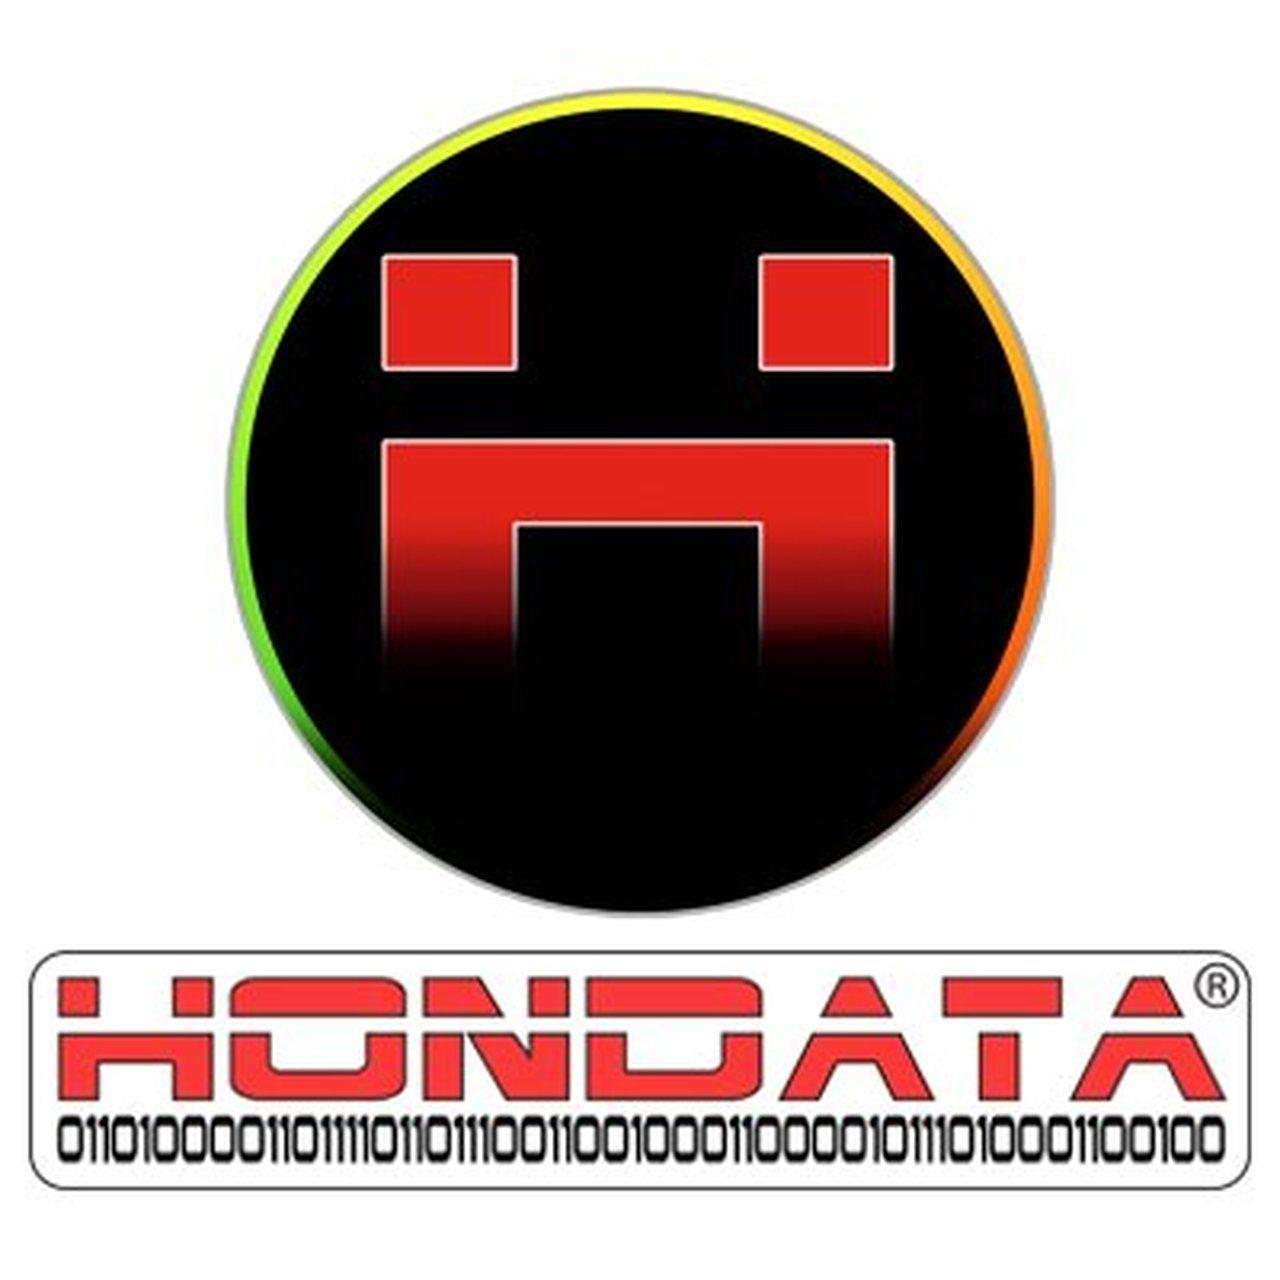 Hondata Logo - Reflash - RSX Base 2002-2004 MT K20A3